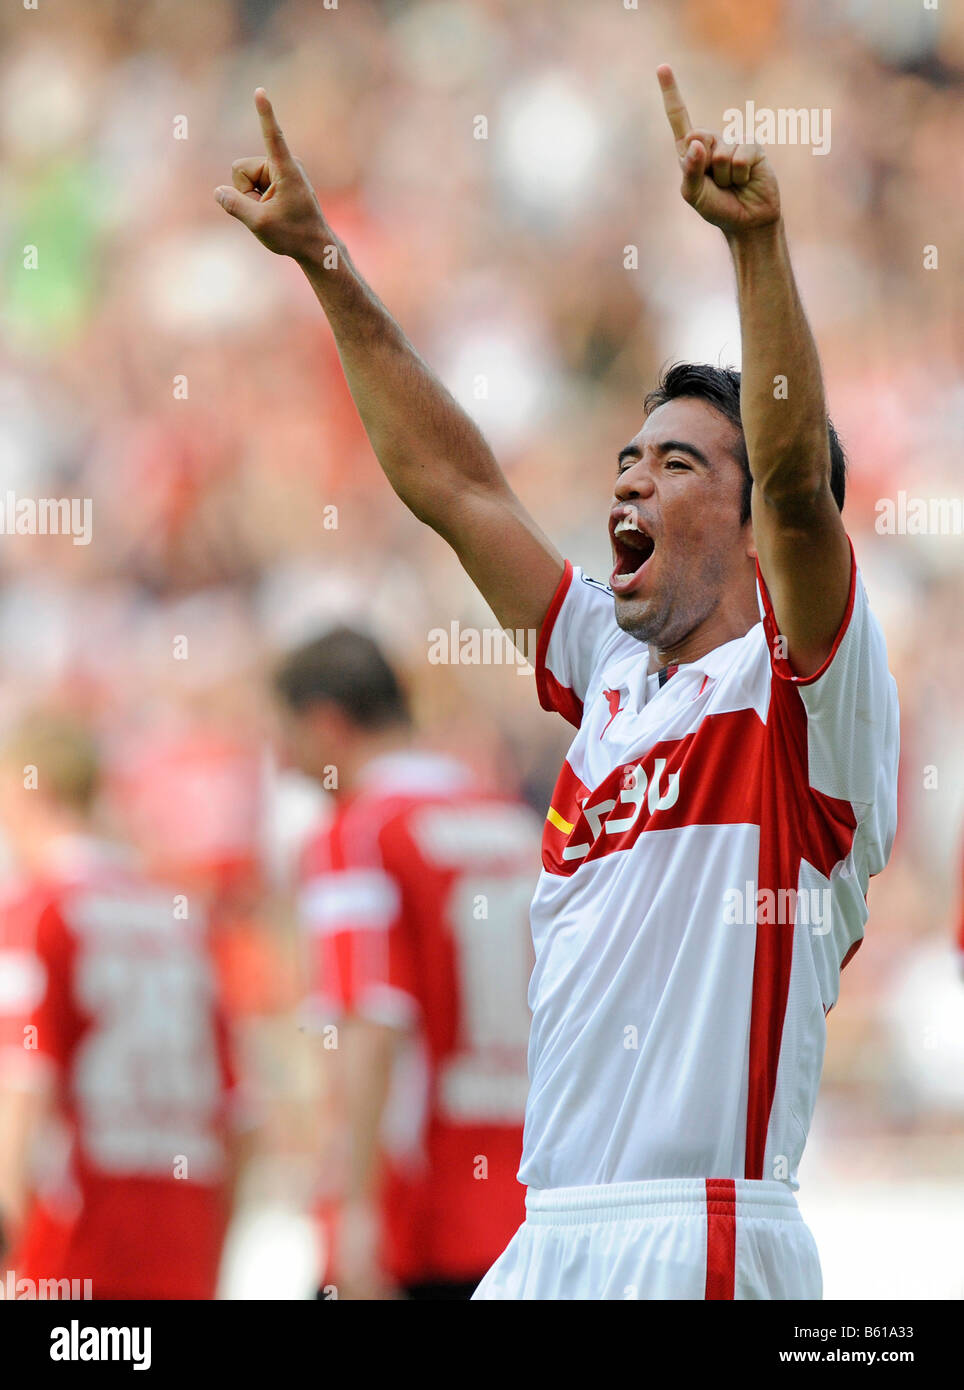 Pavel PARDO, playing for VfB Stuttgart, celebrating a goal Stock Photo